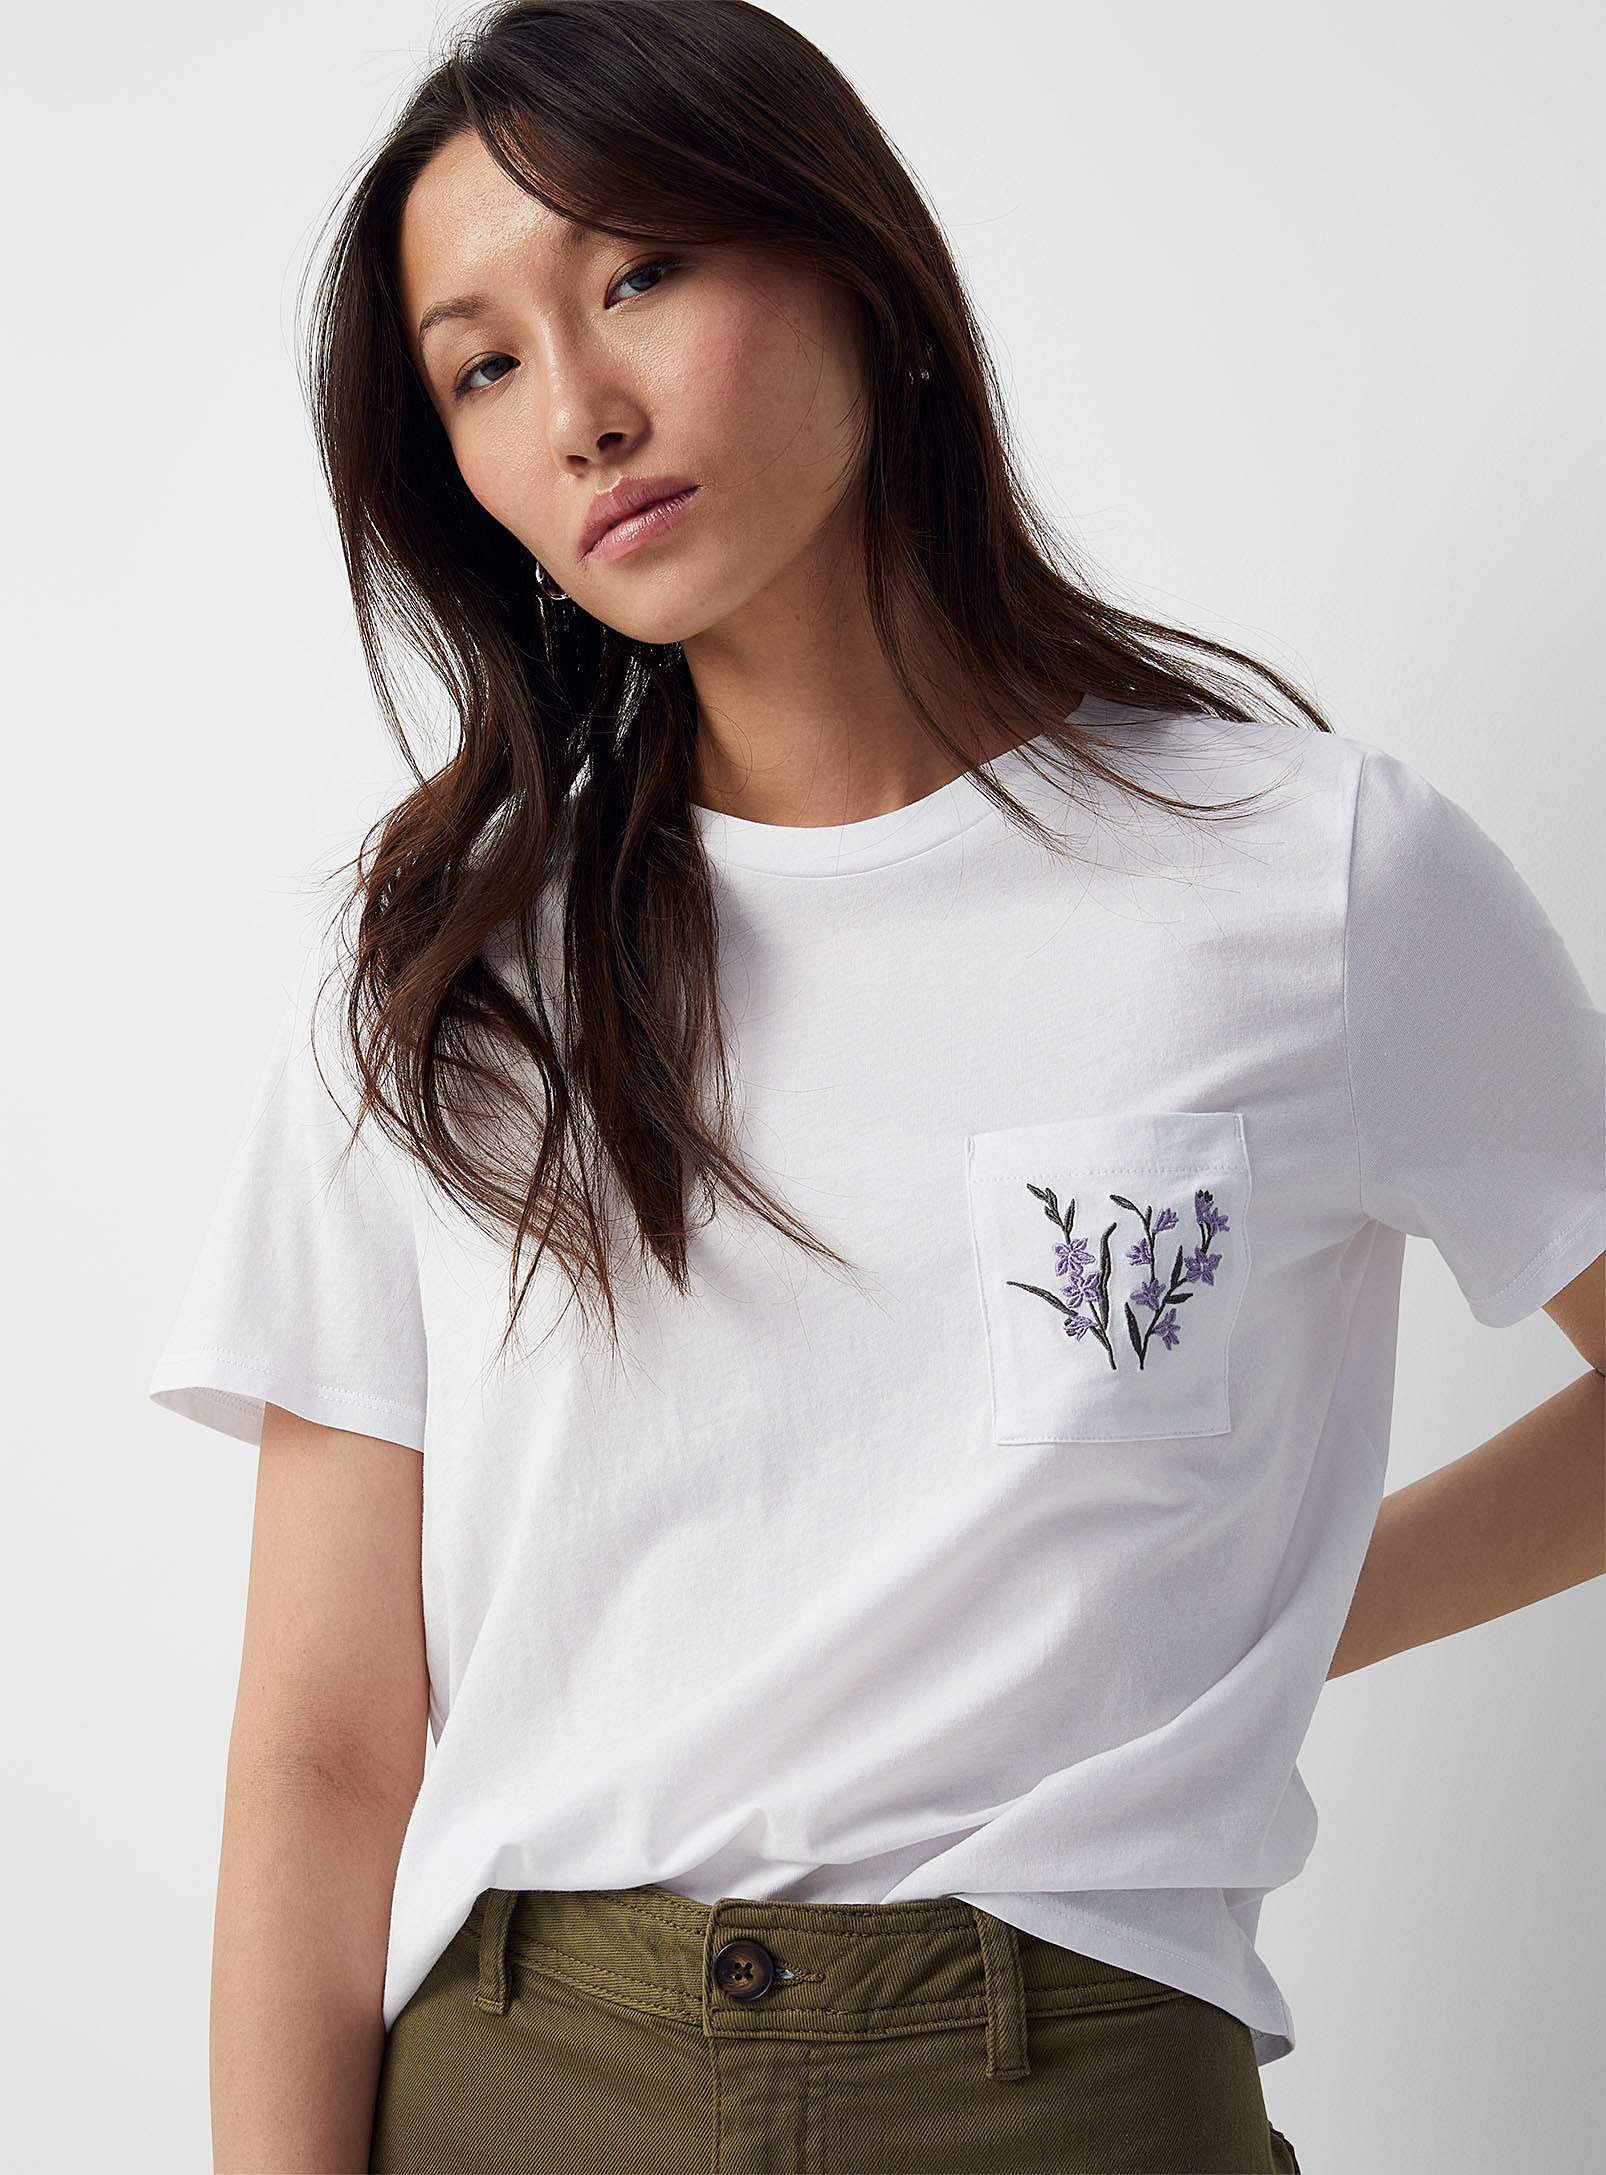 Contemporaine - Women's Floral embroidery pocket T-shirt